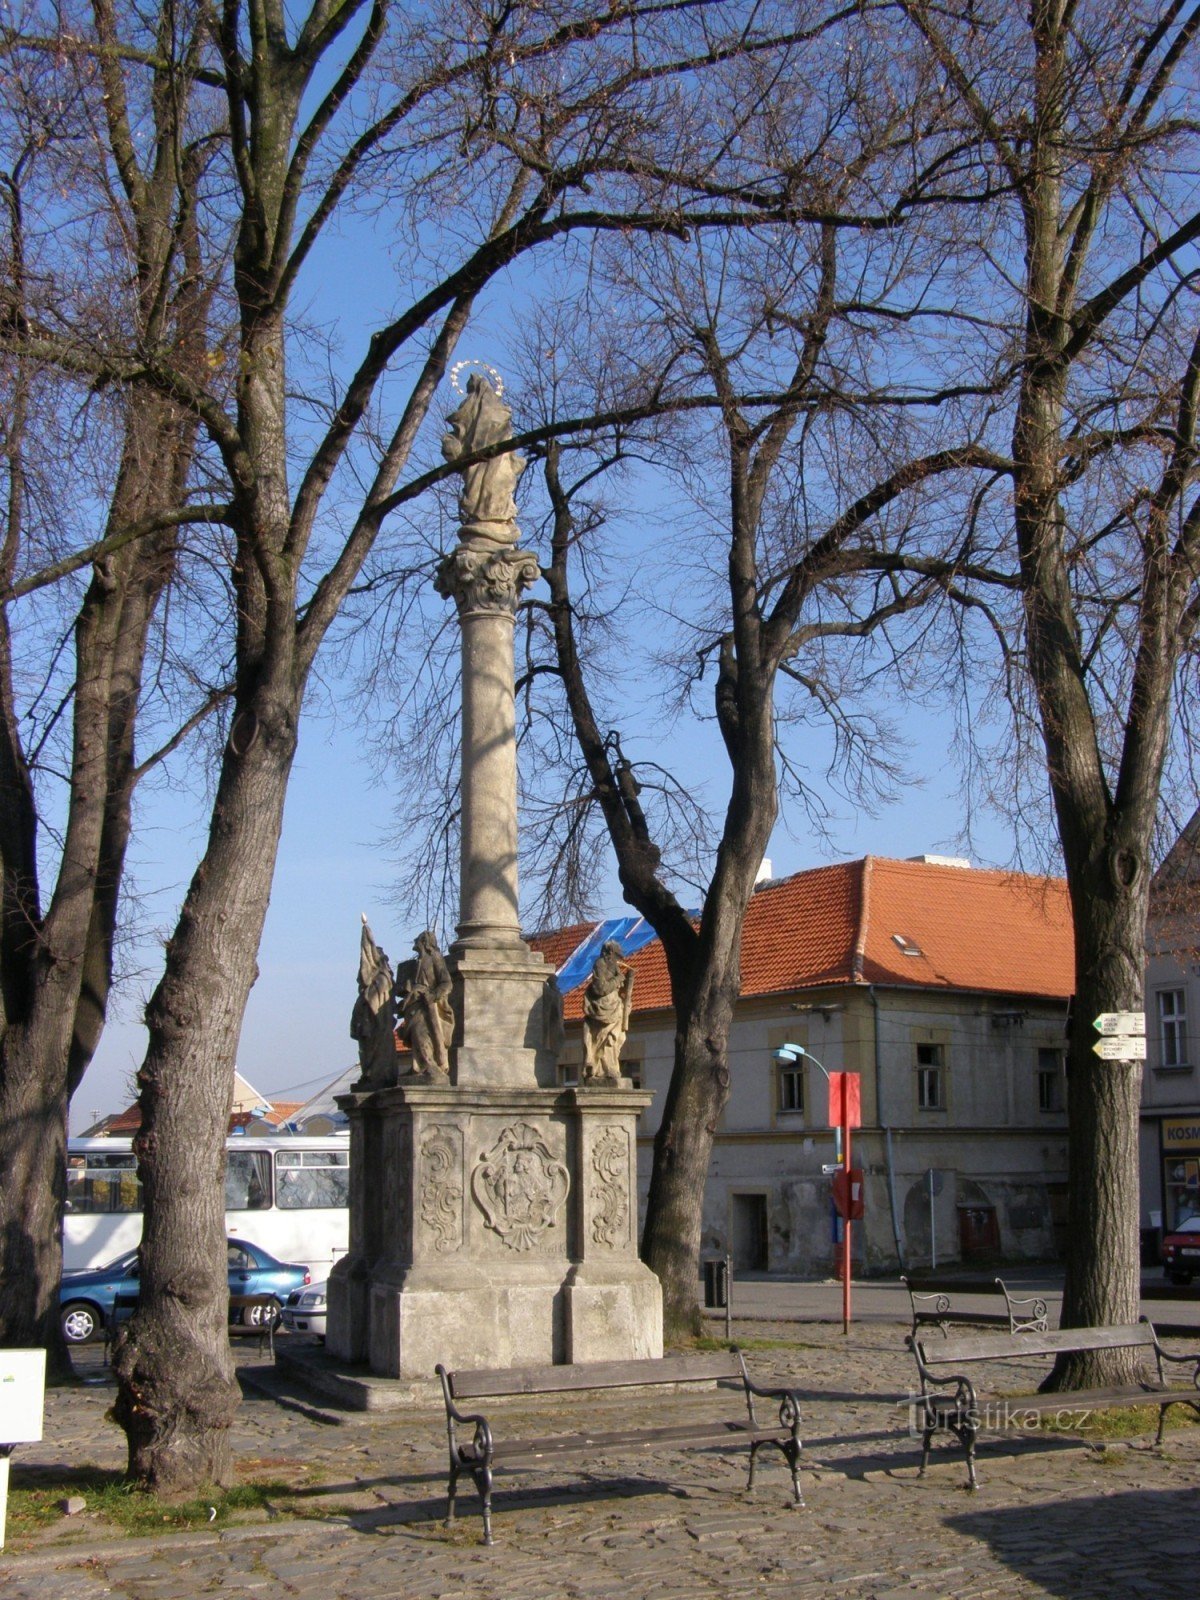 tourist crossroads Týnec nad Labem - square